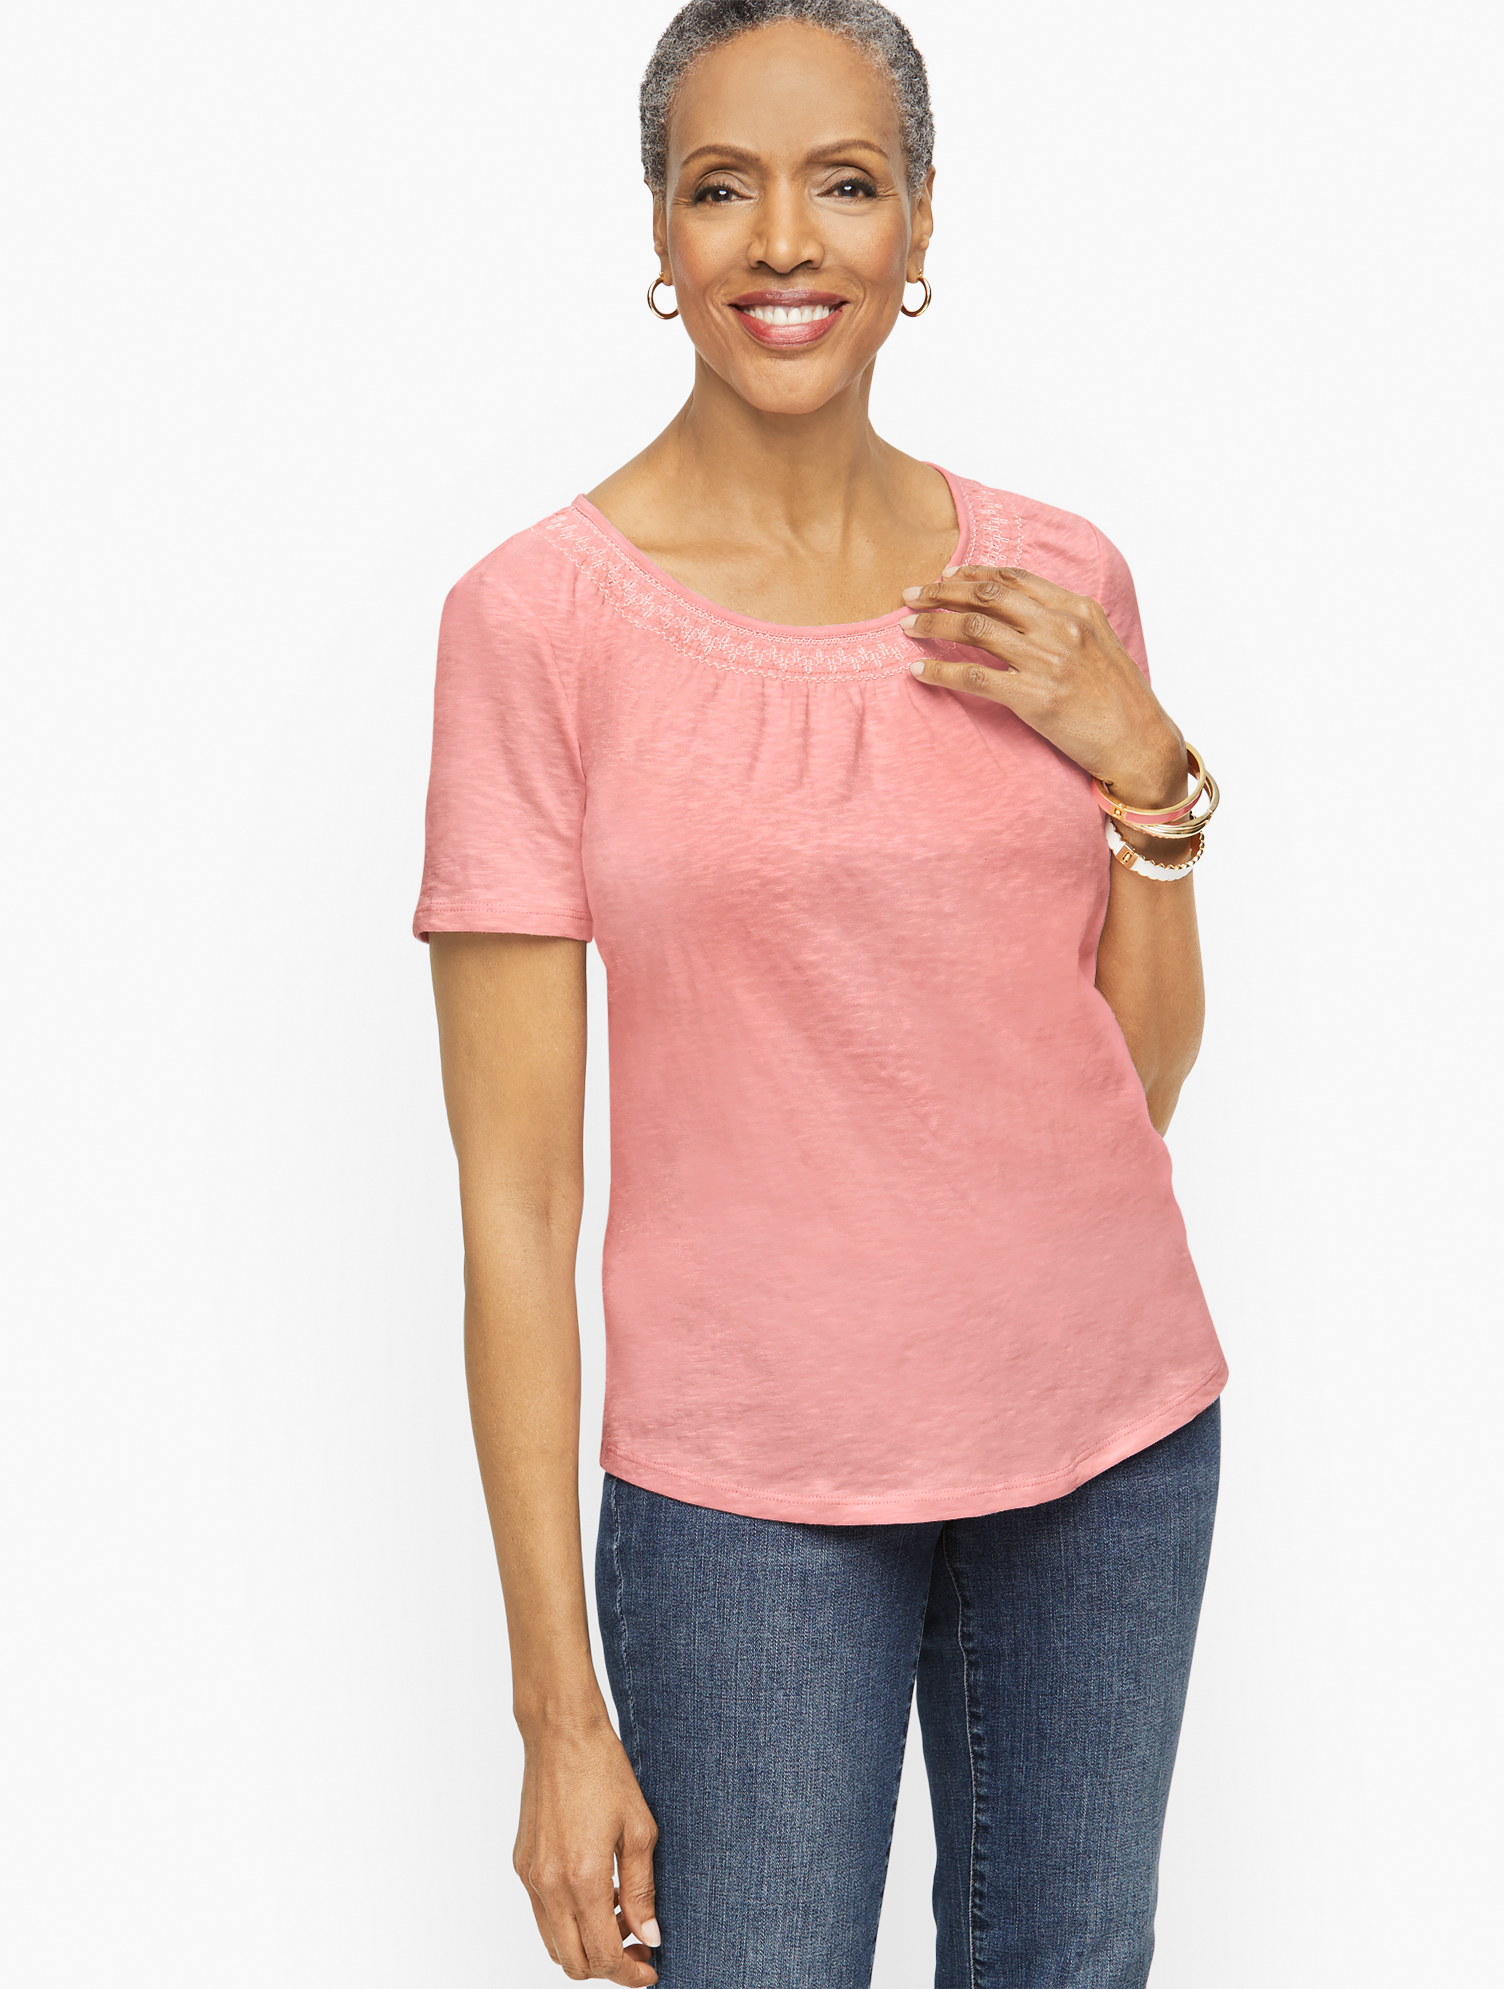 Talbots Smocked Scoop Neck T-shirt - Pink Sand - Medium - 100% Cotton |  ModeSens